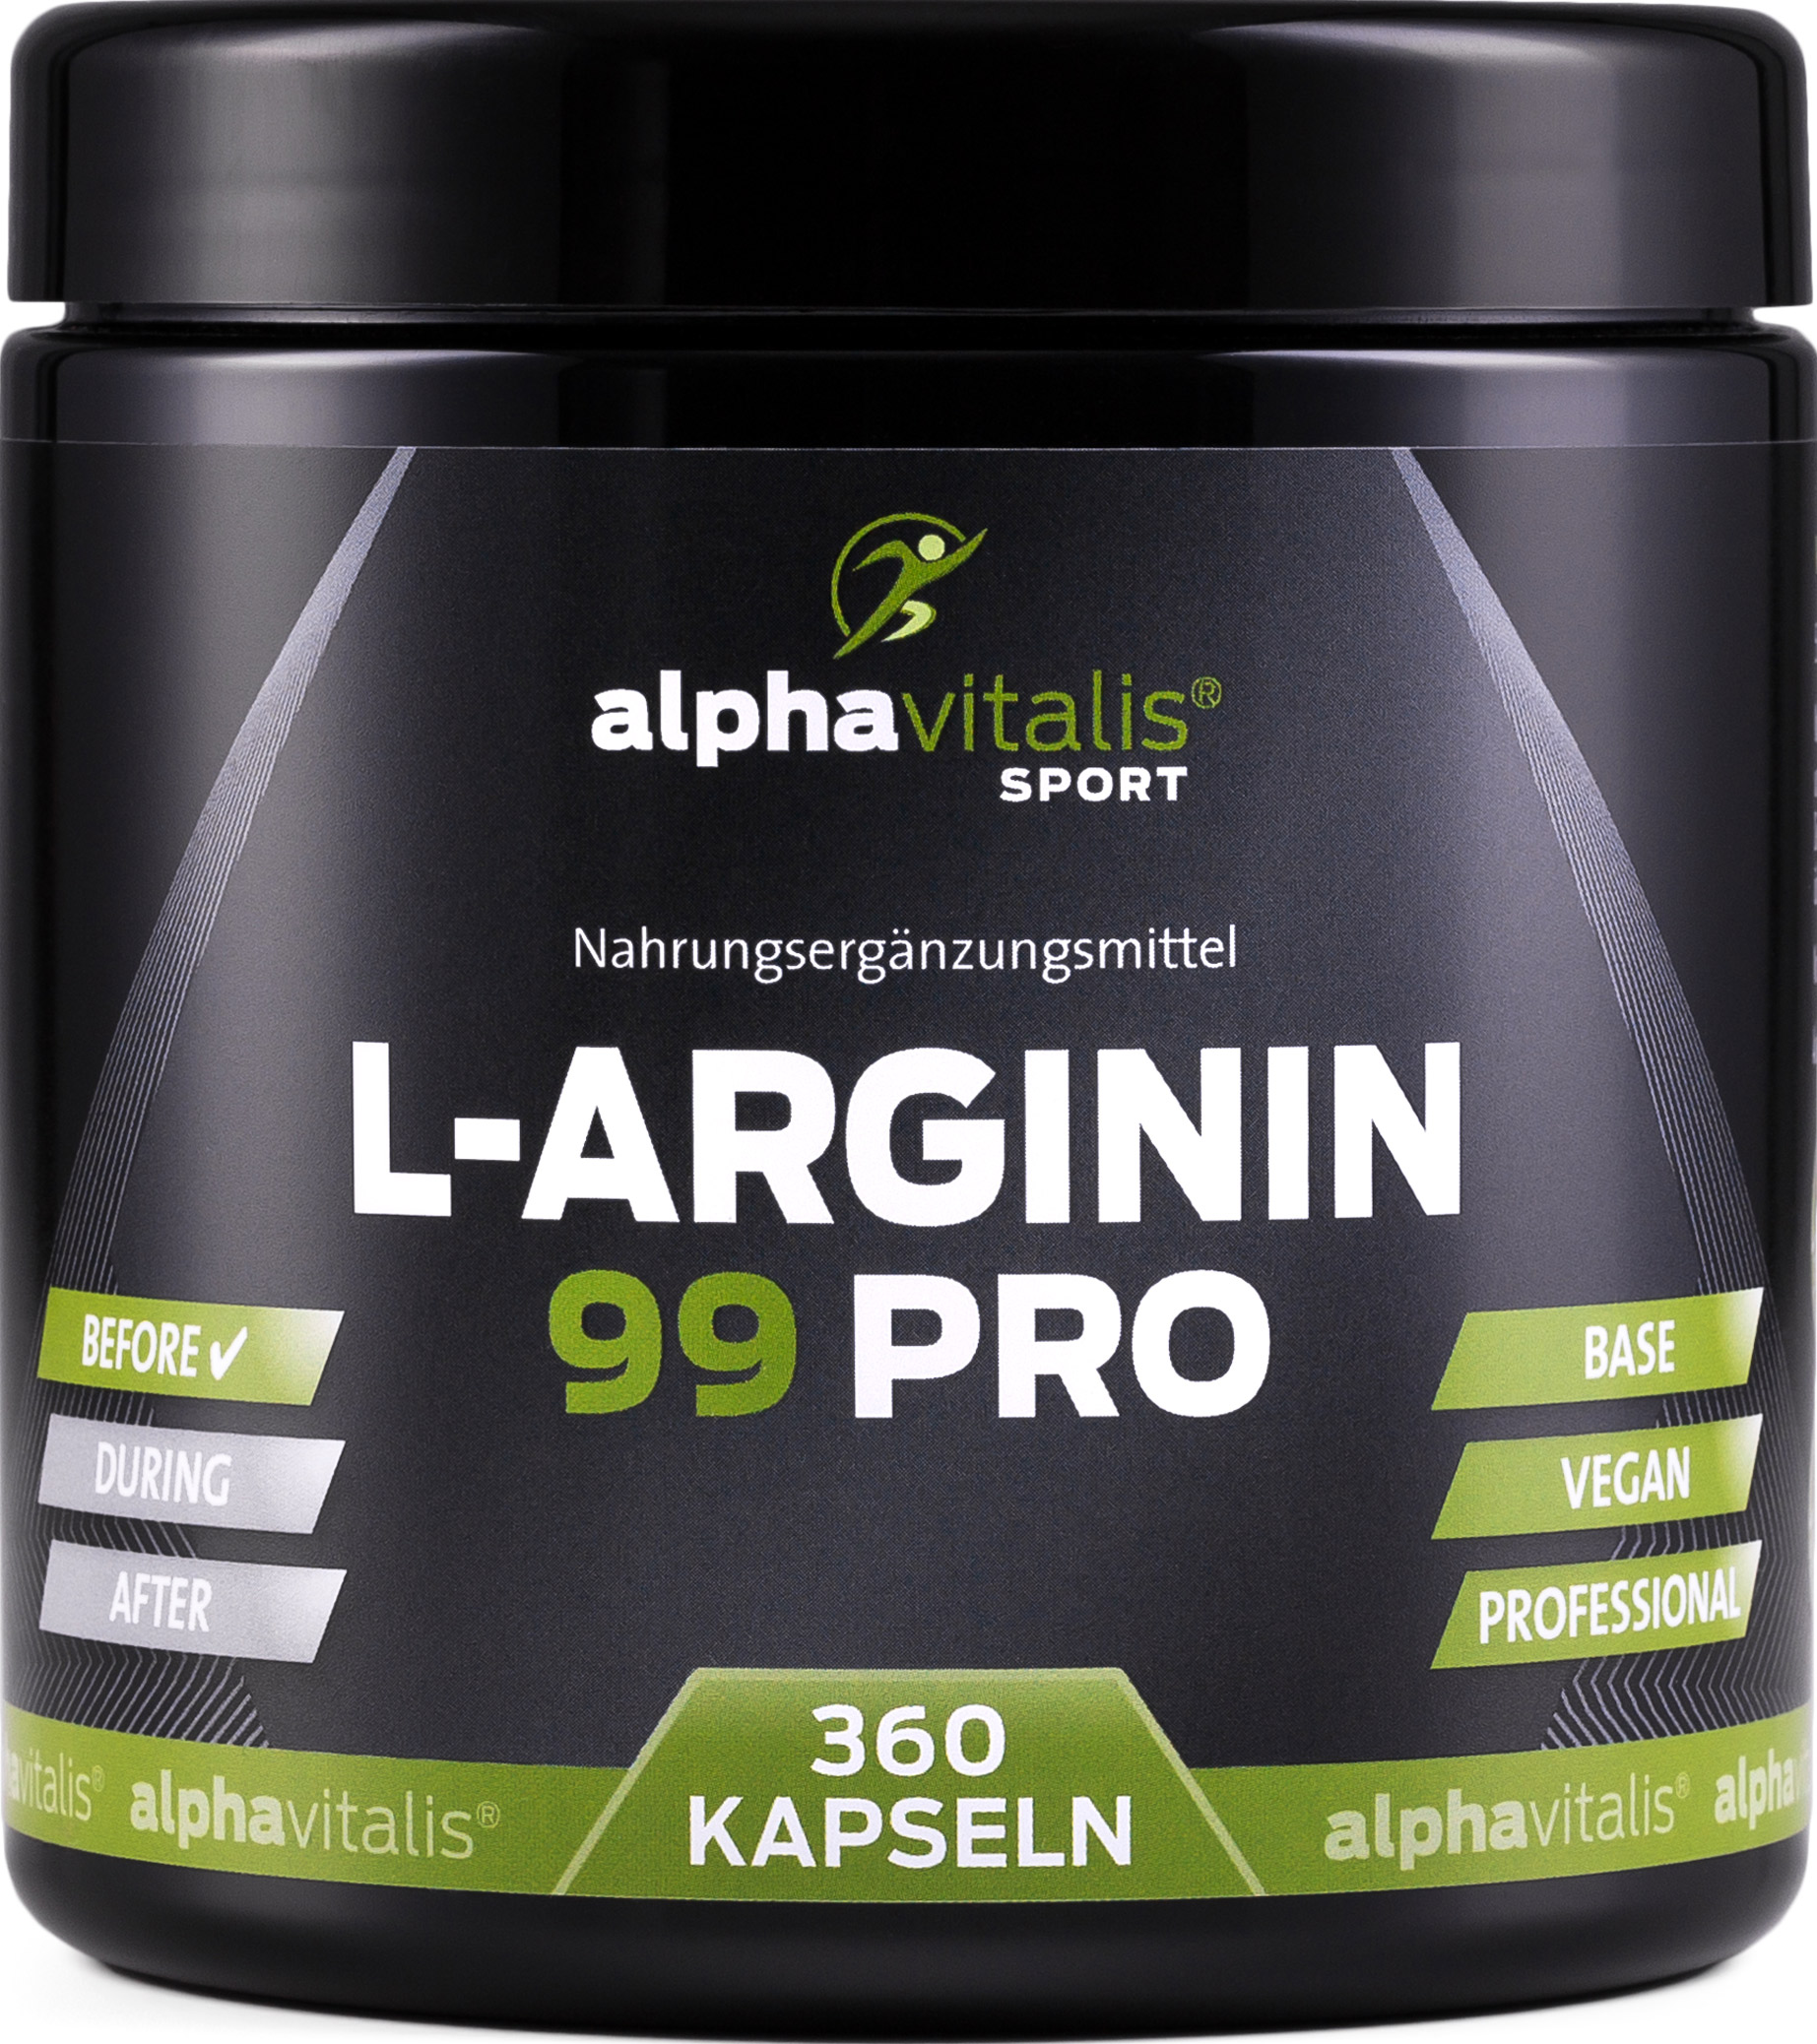 Alphavitalis L-Arginin 99 Pro